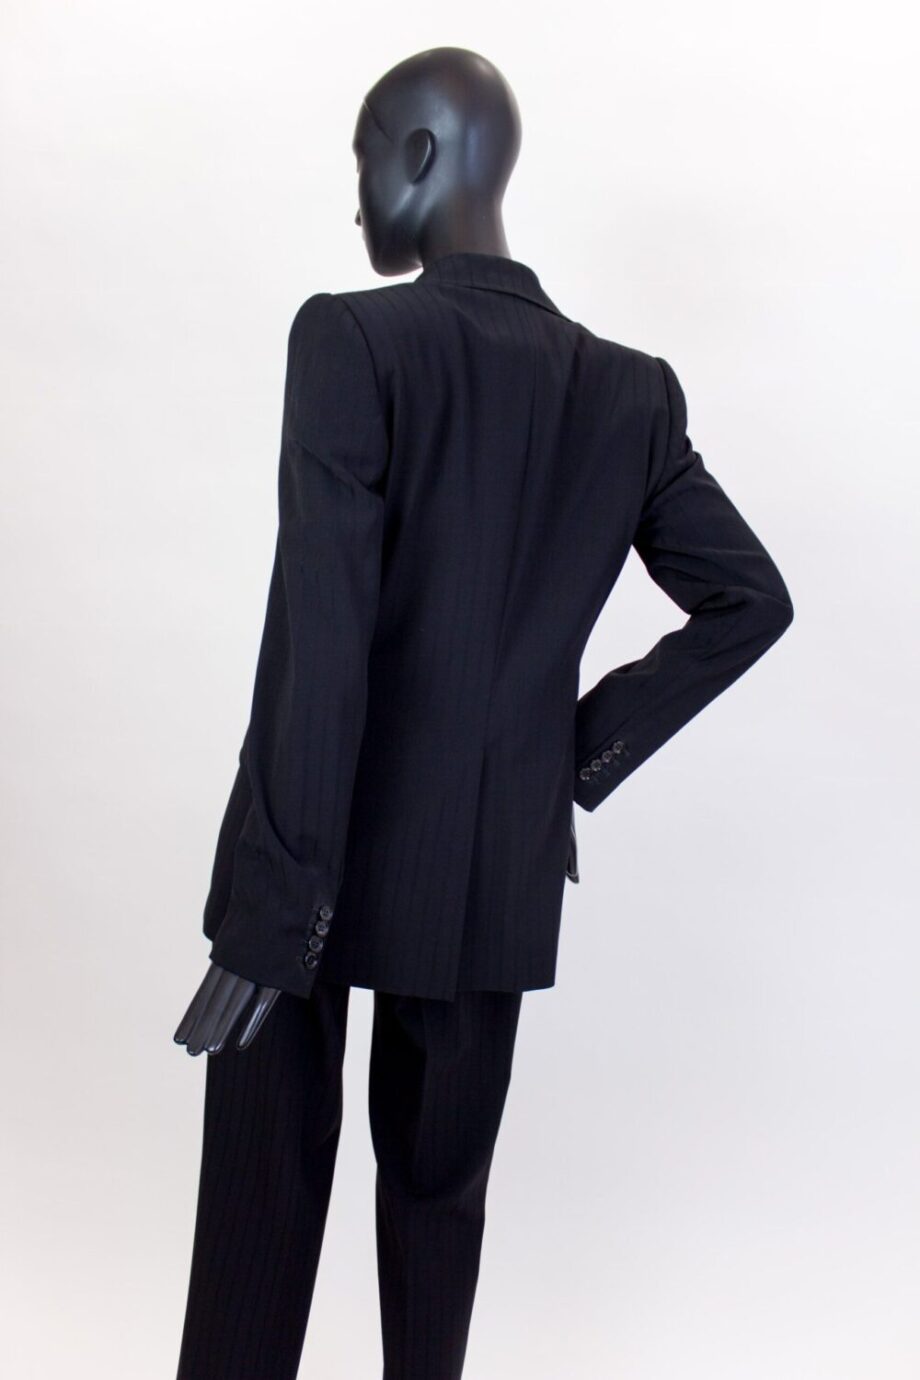 Dolce & Gabbana black blazer back